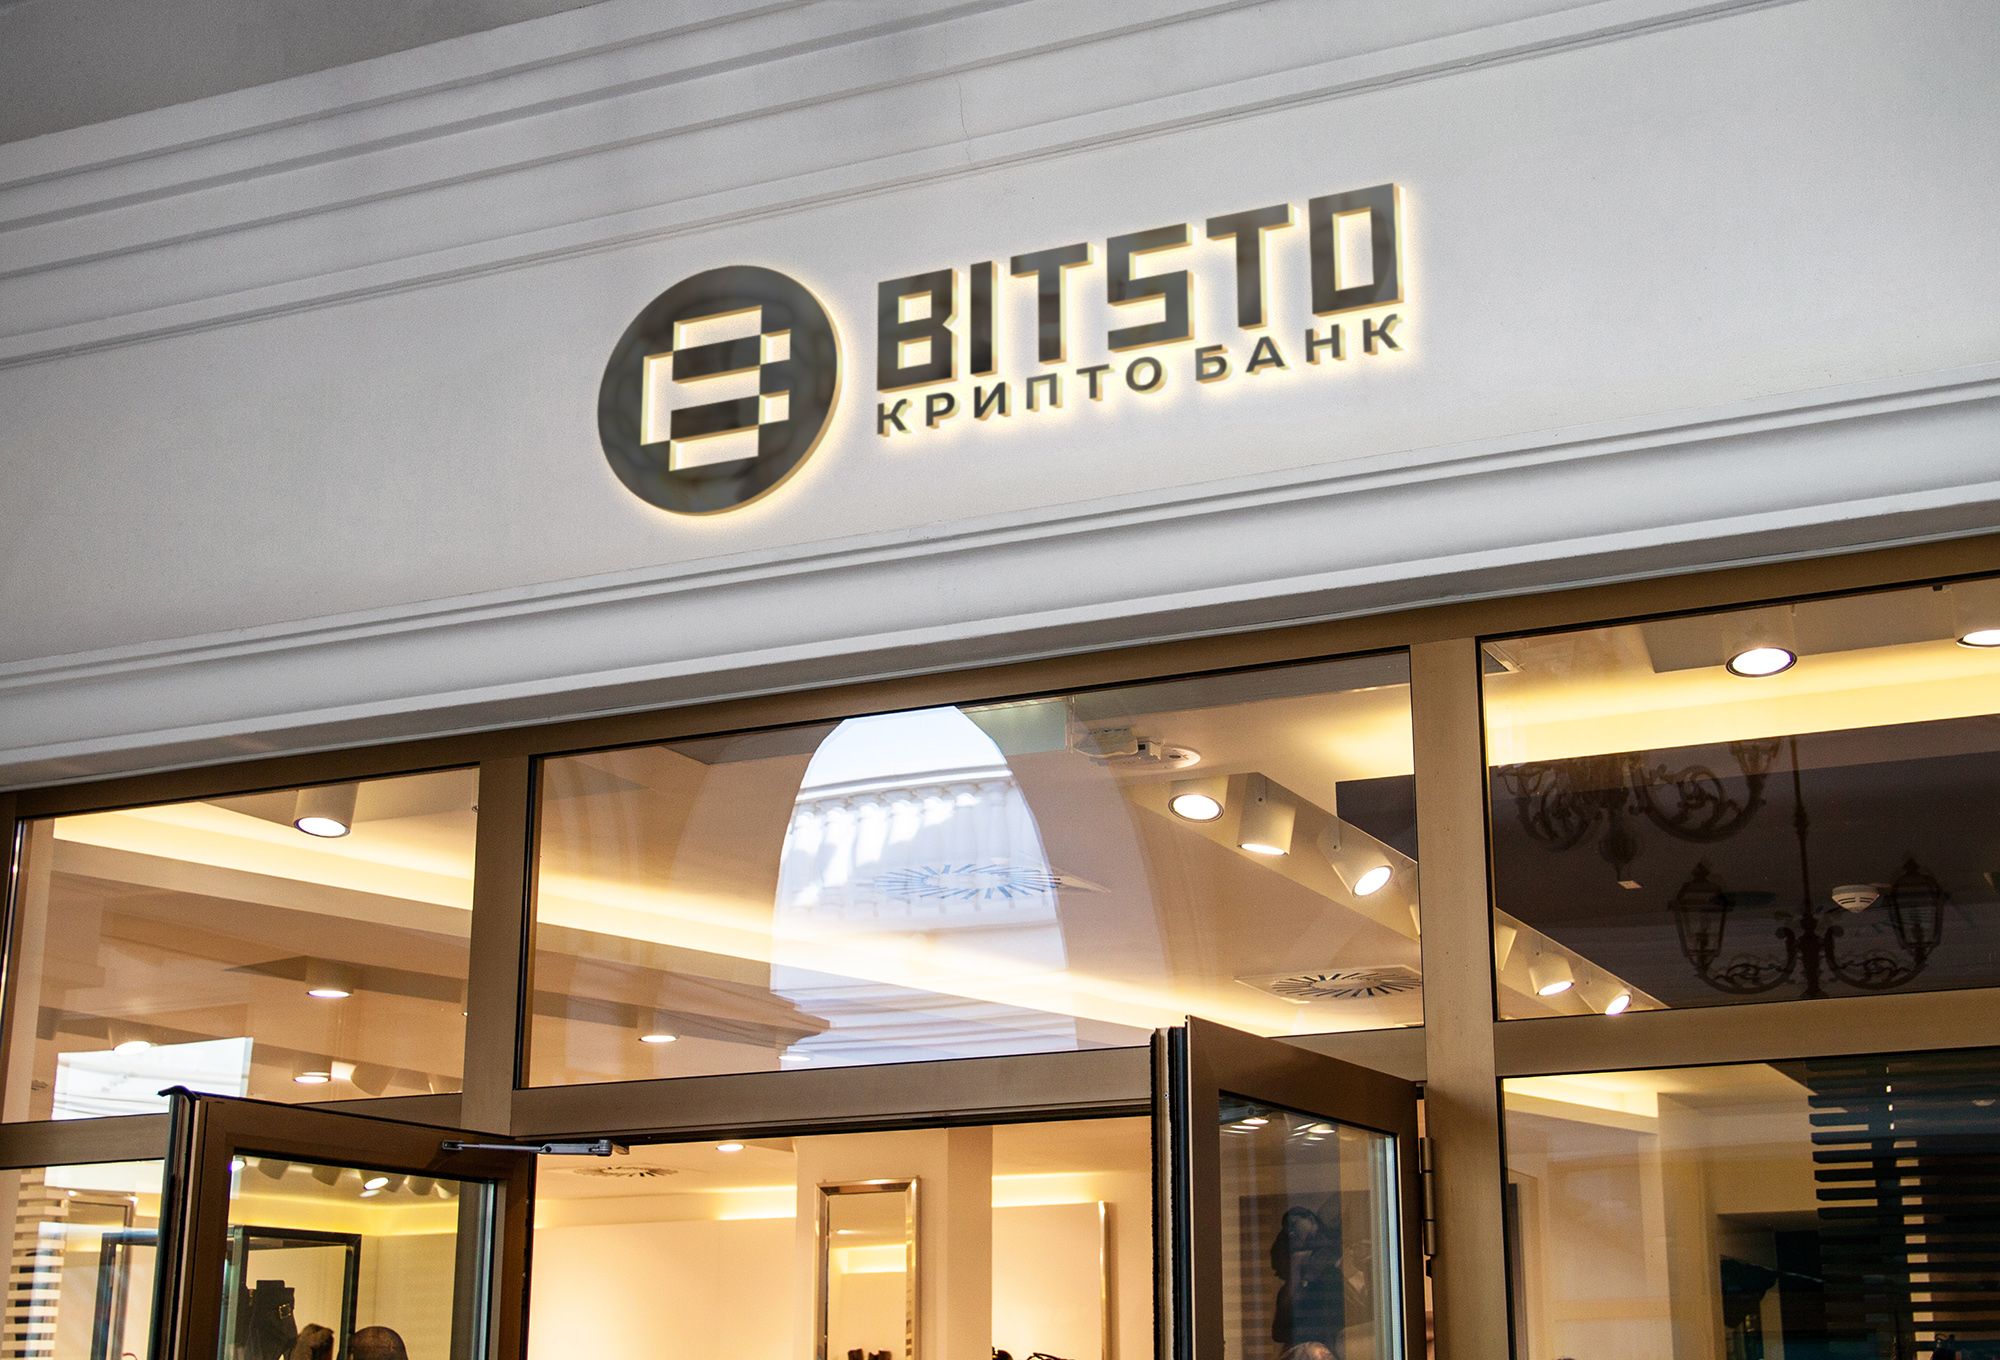 Логотип для Bitsto - дизайнер serz4868